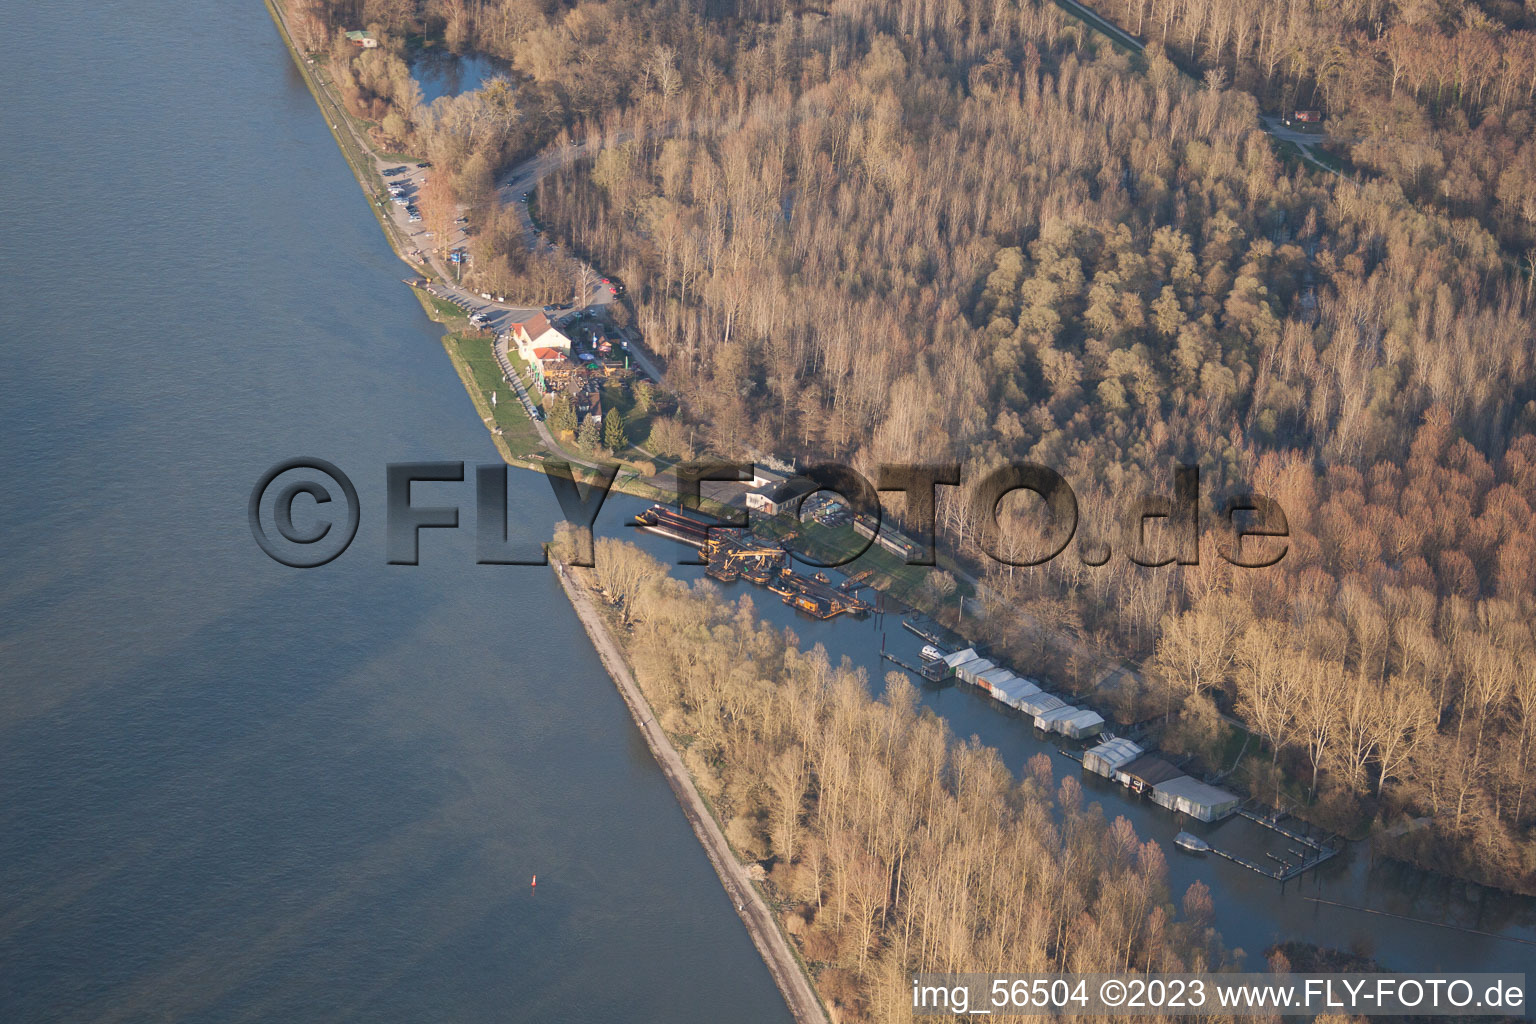 Aerial view of Neuburg in the state Rhineland-Palatinate, Germany